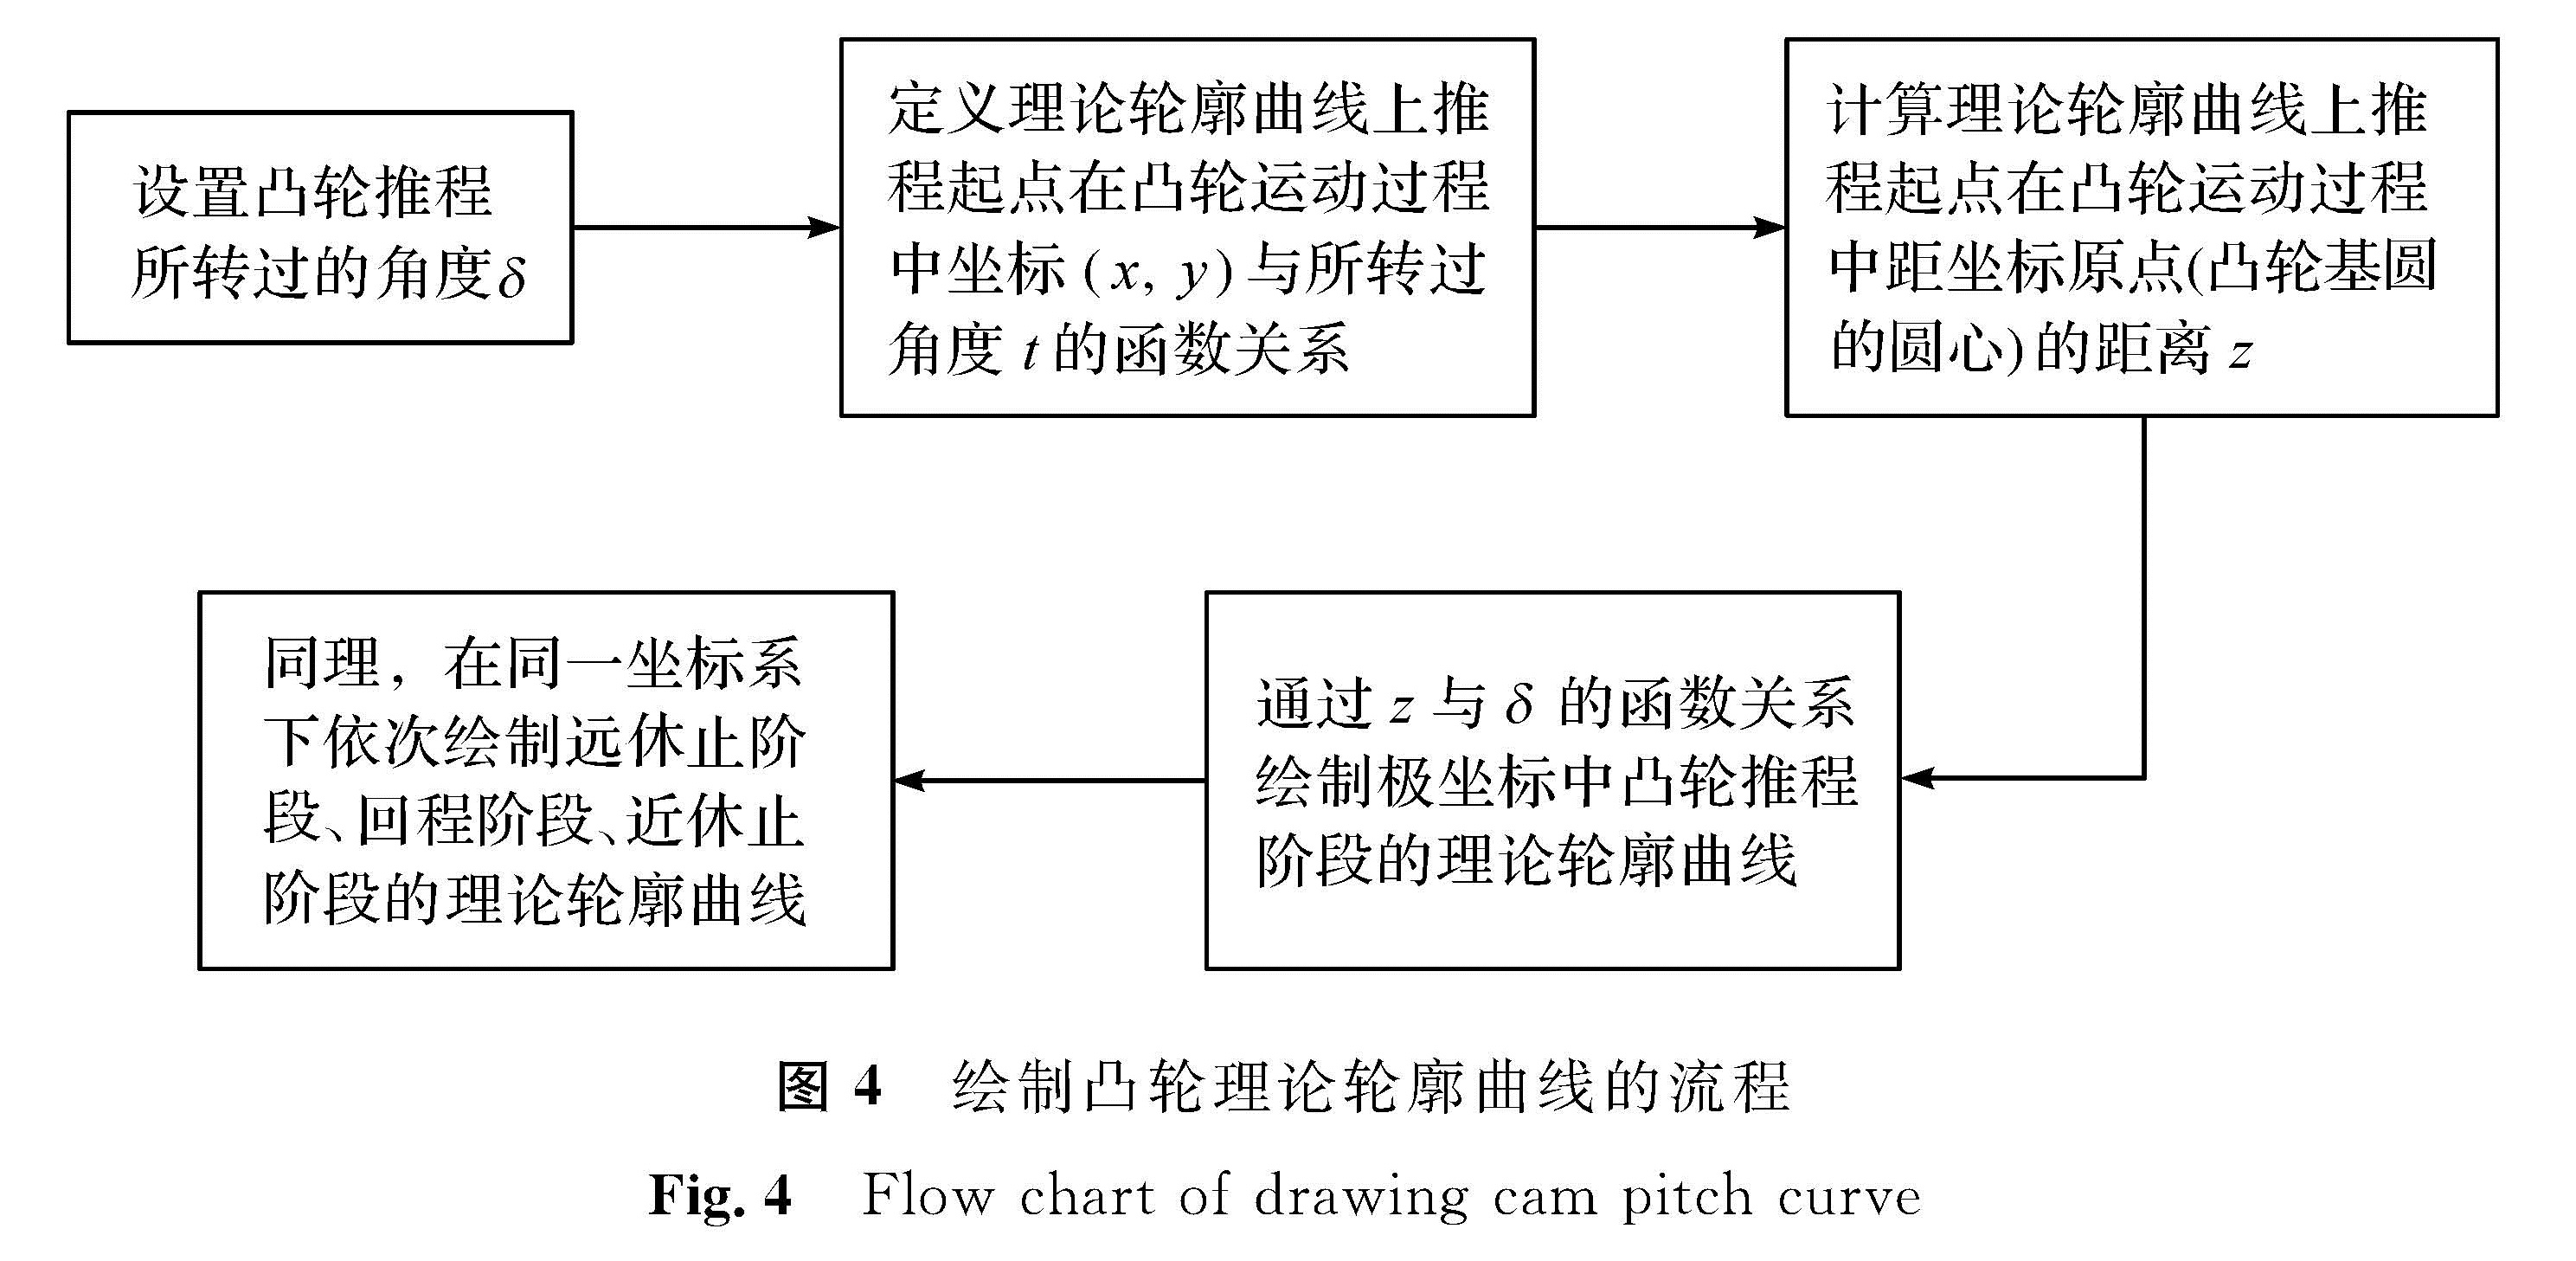 图4 绘制凸轮理论轮廓曲线的流程<br/>Fig.4 Flow chart of drawing cam pitch curve